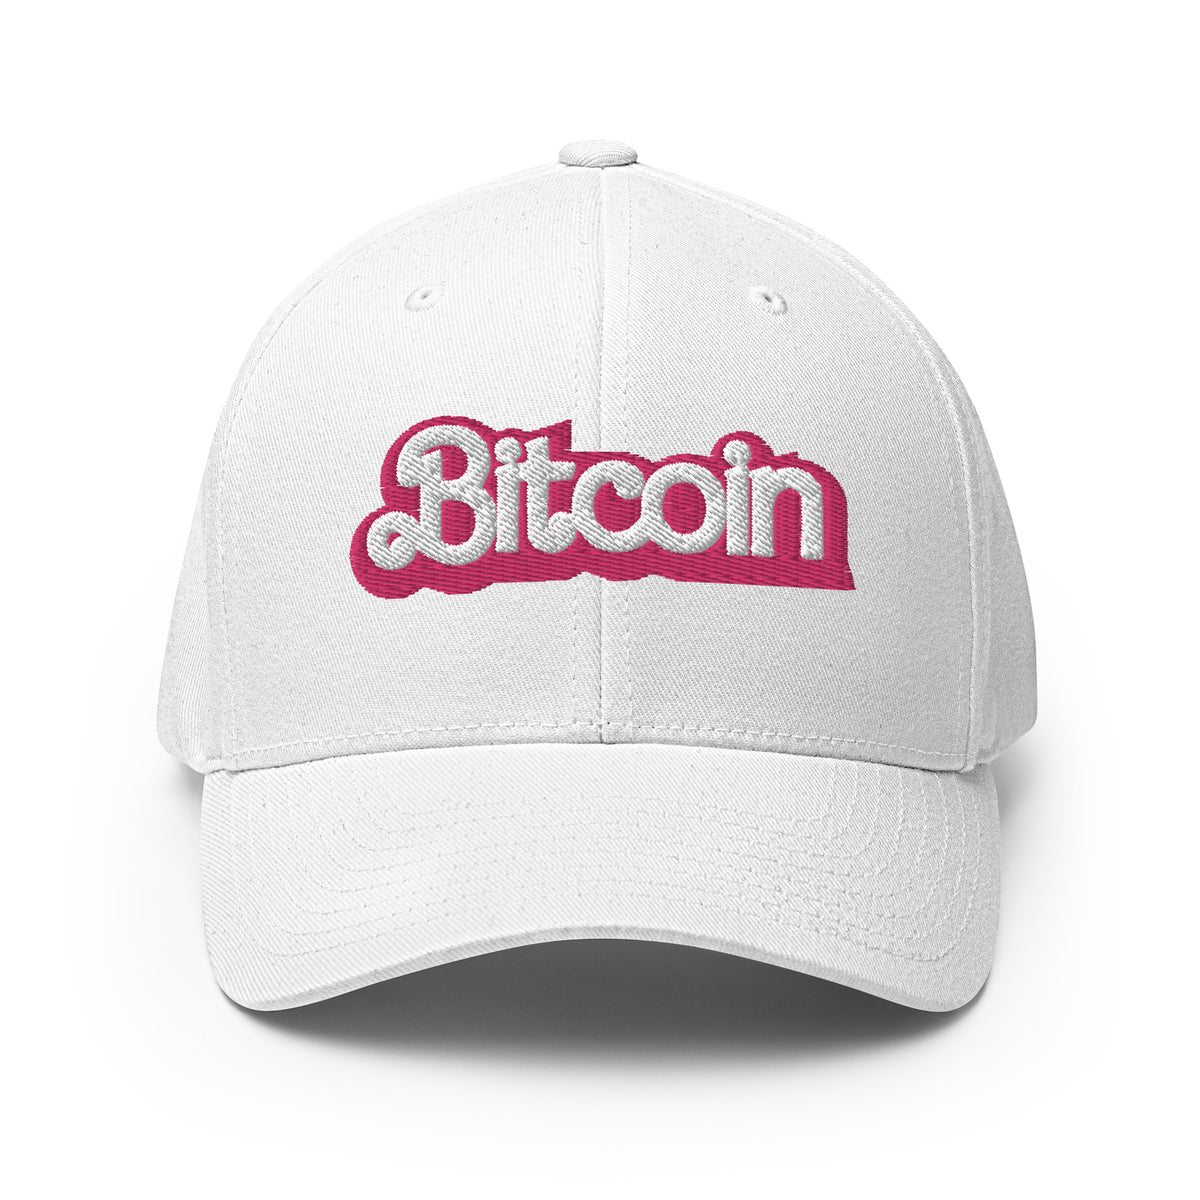 In The Bitcoin World Flexfit Hat - fomo21